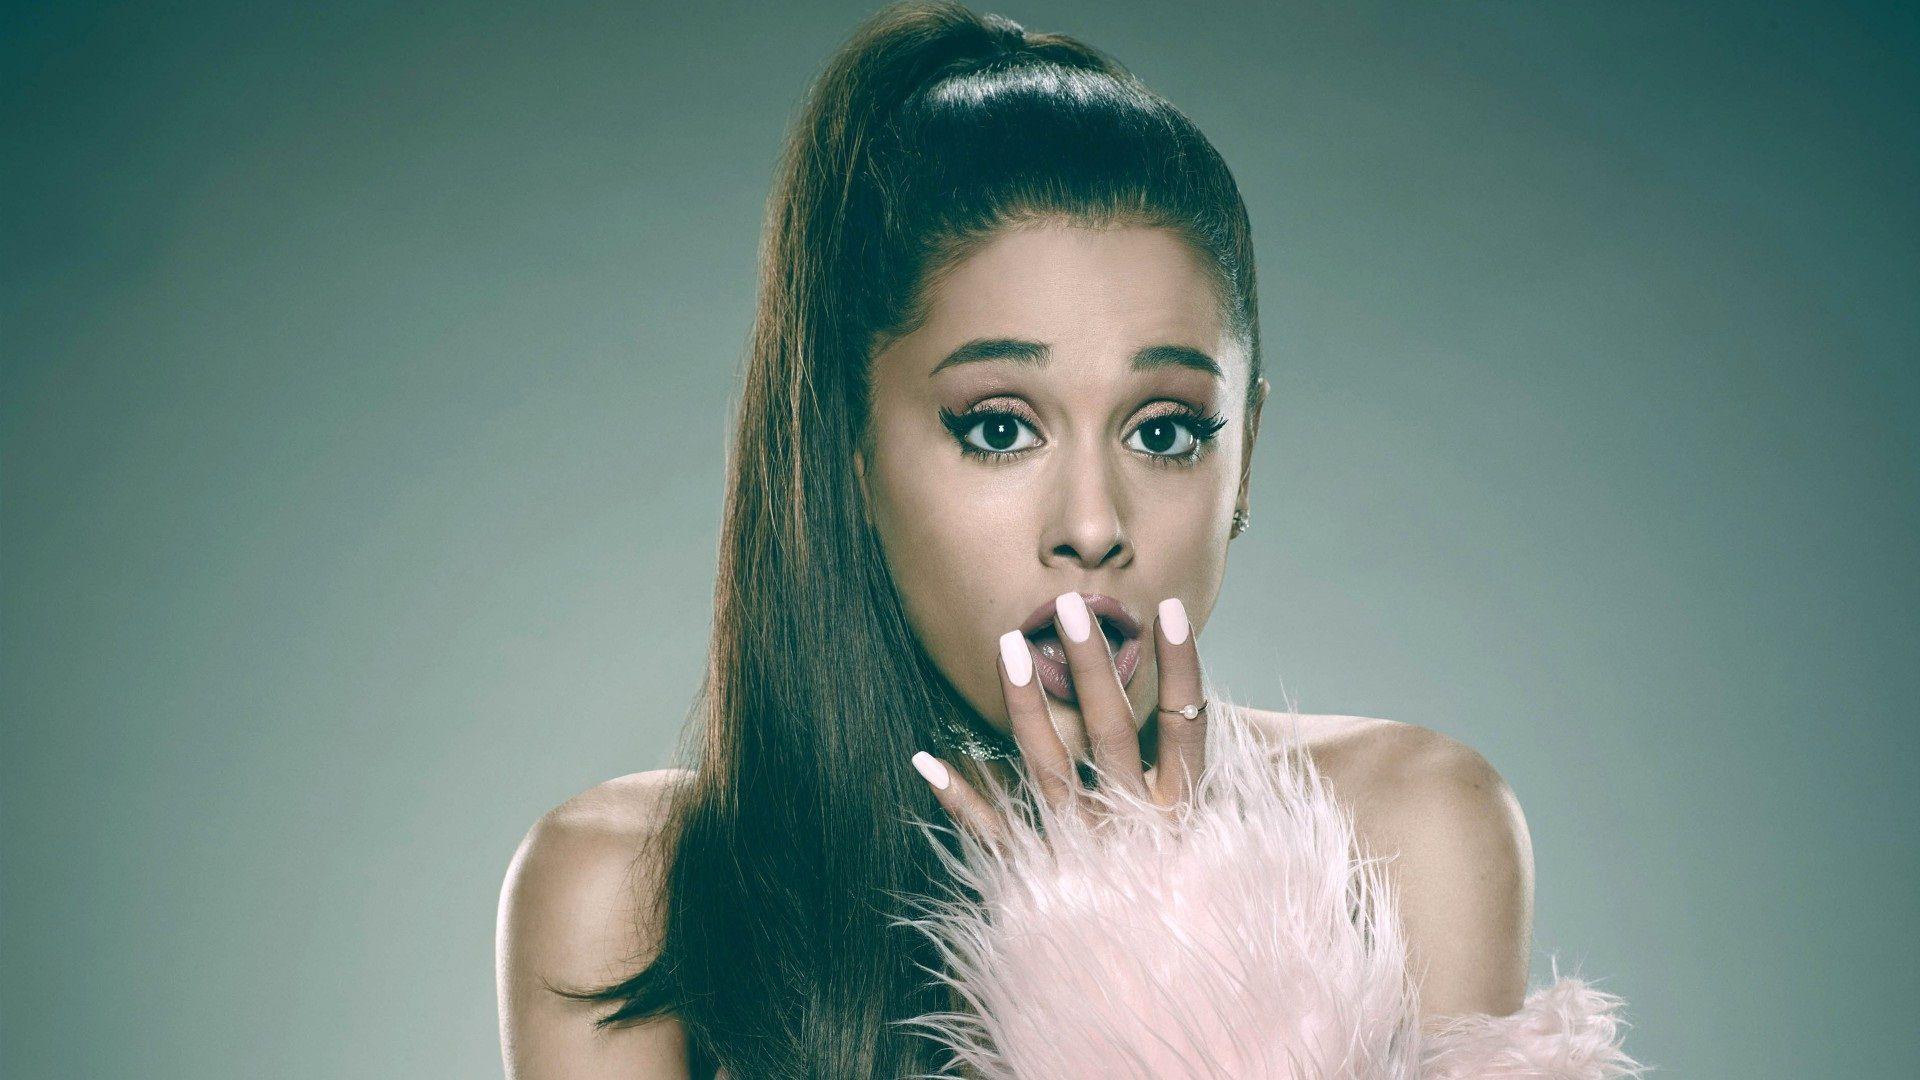 Ariana Grande Desktop Wallpapers - Top Free Ariana Grande ...